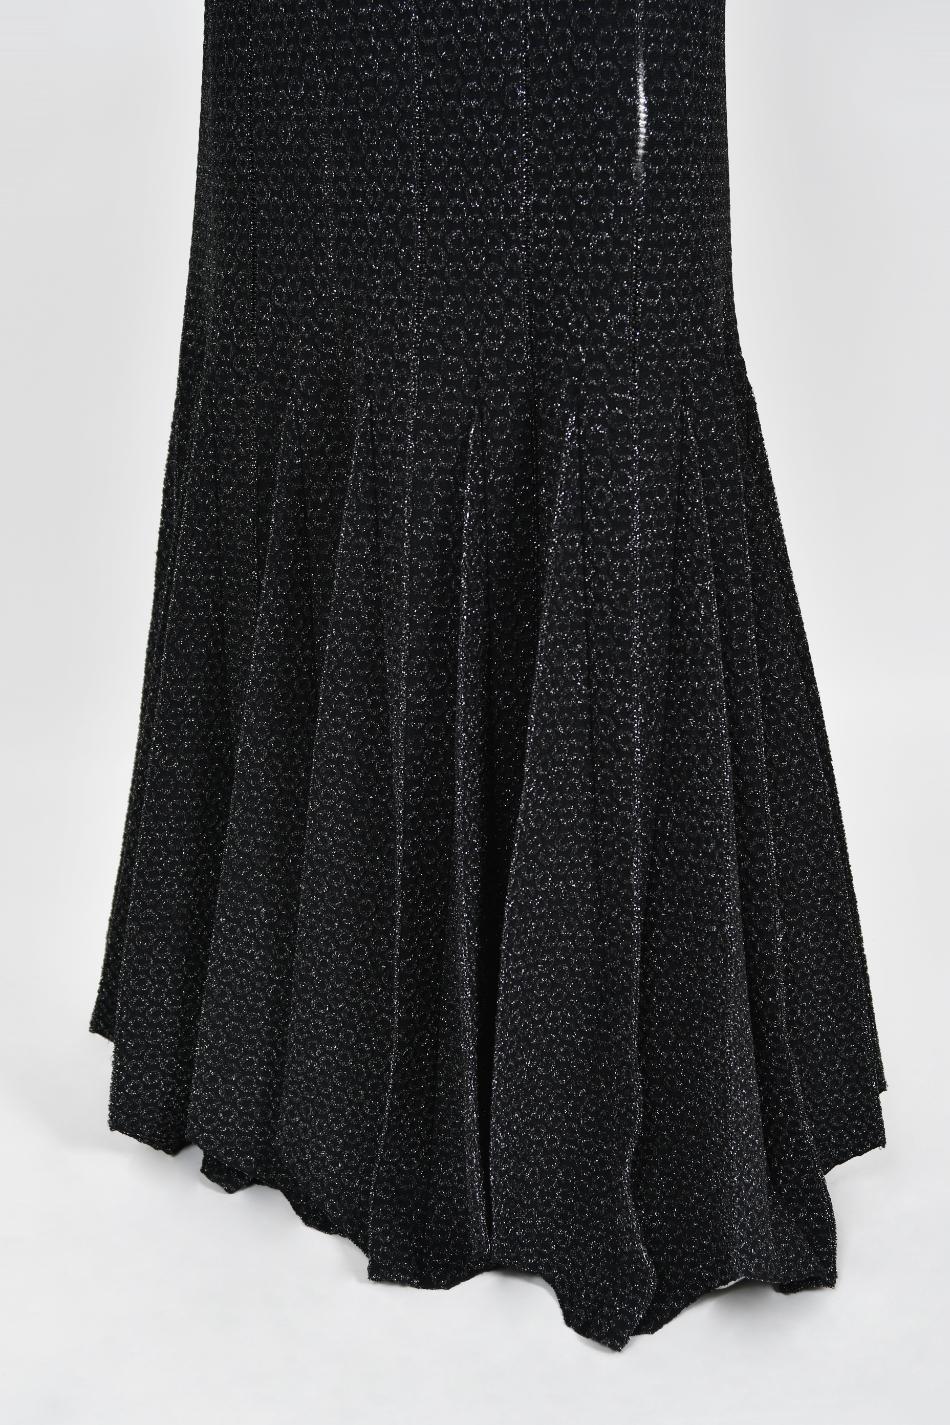 Vintage Azzedine Alaia Black Metallic Knit Bodycon Sheer Cutwork Fishtail Gown 3